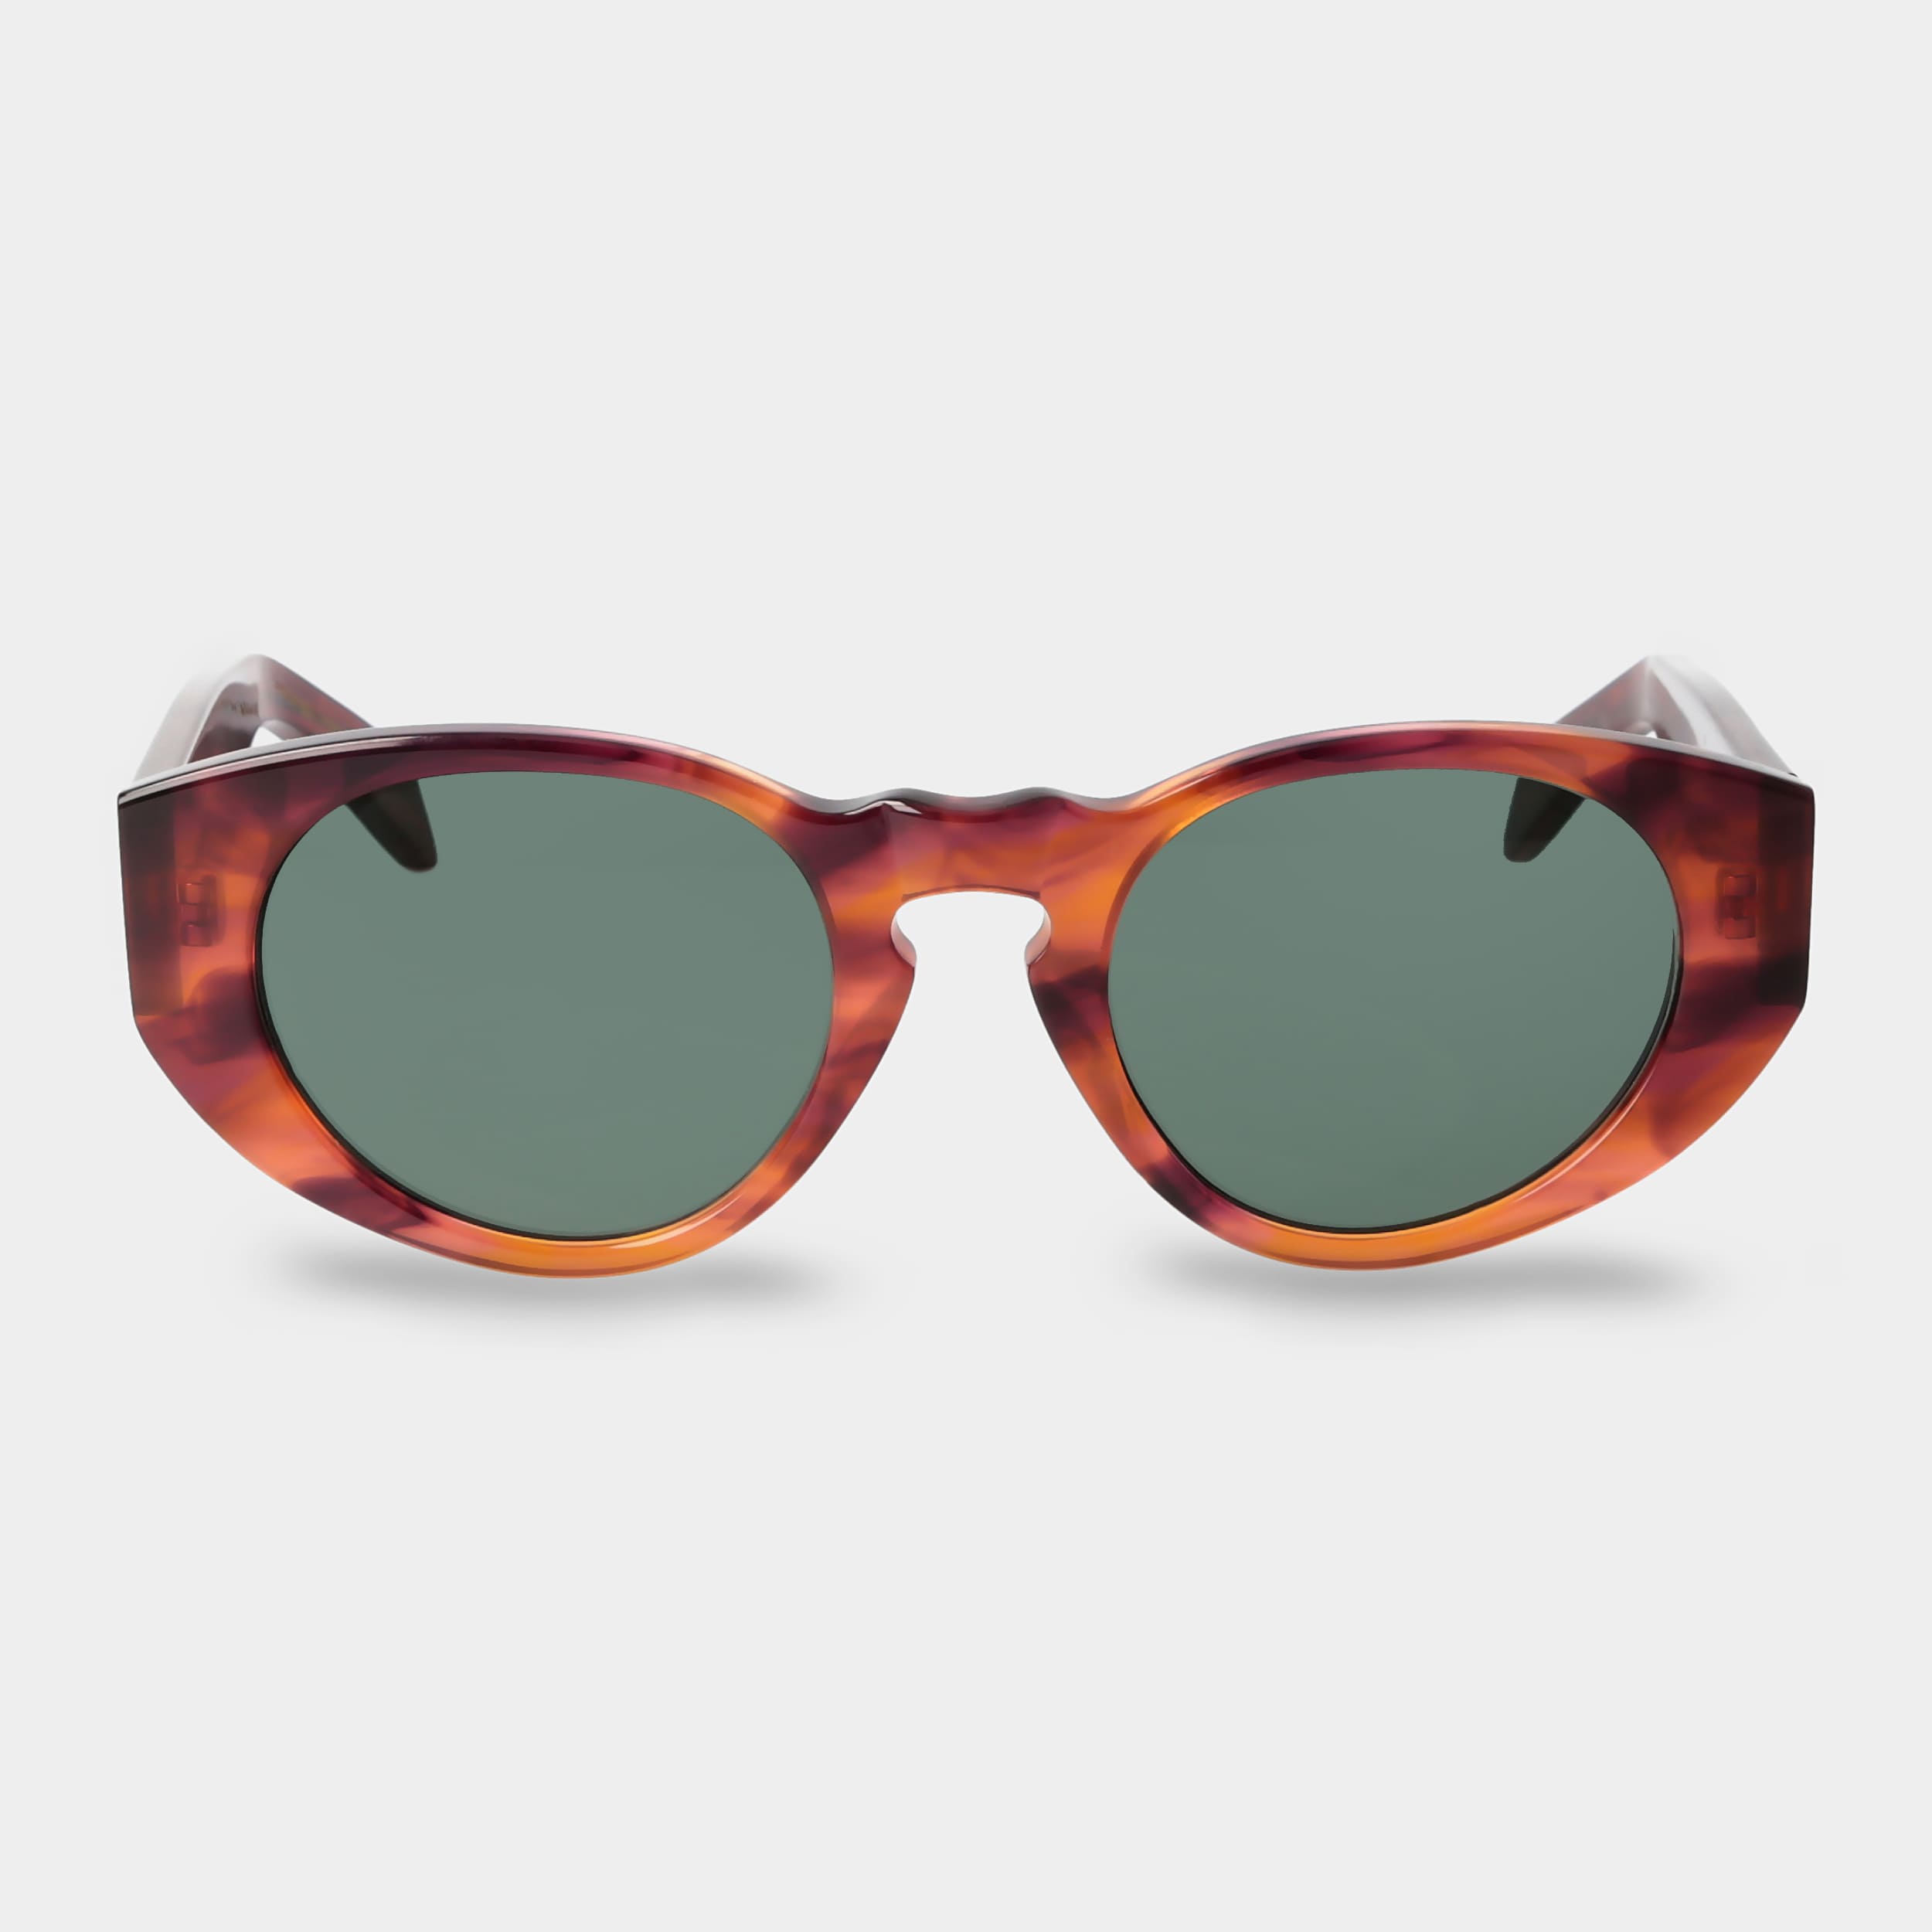 sunglasses-madras-eco-havana-bottle-green-sustainable-tbd-eyewear-front